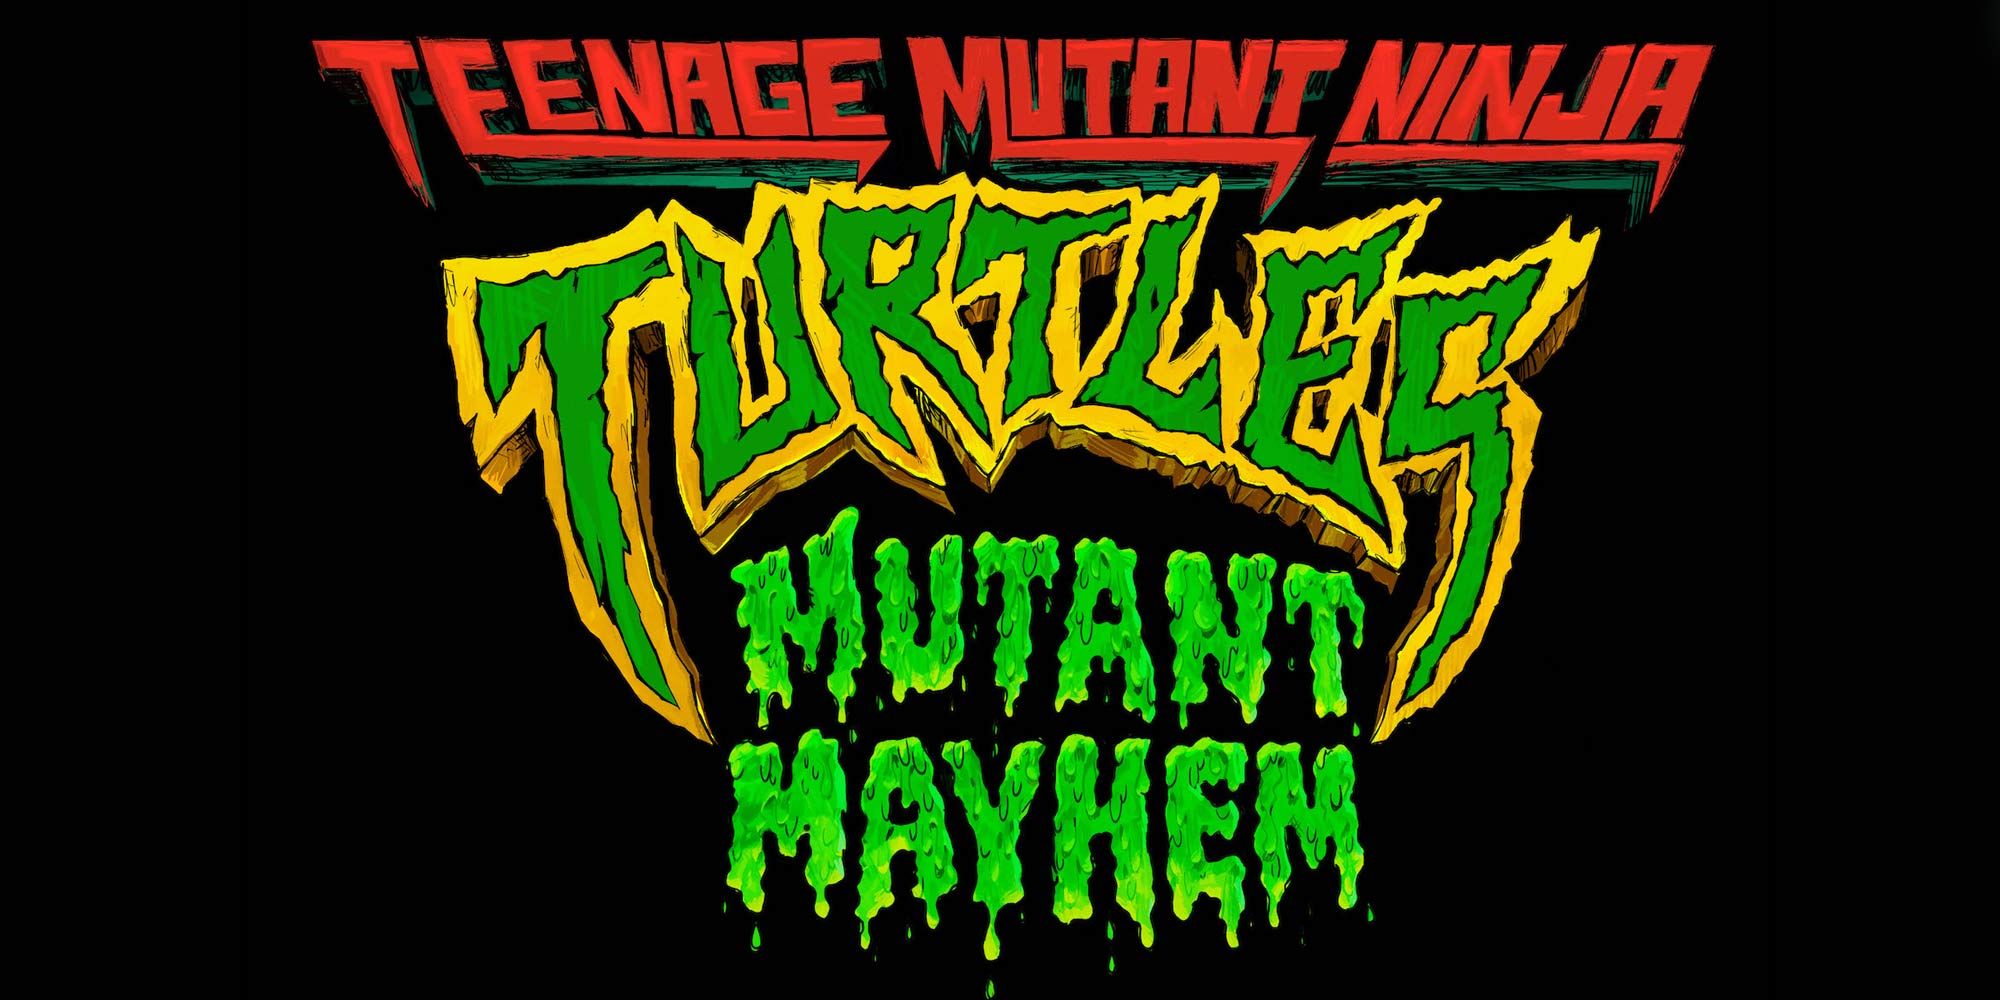 La película animada Teenage Mutant Ninja Turtles de Seth Rogen revela título